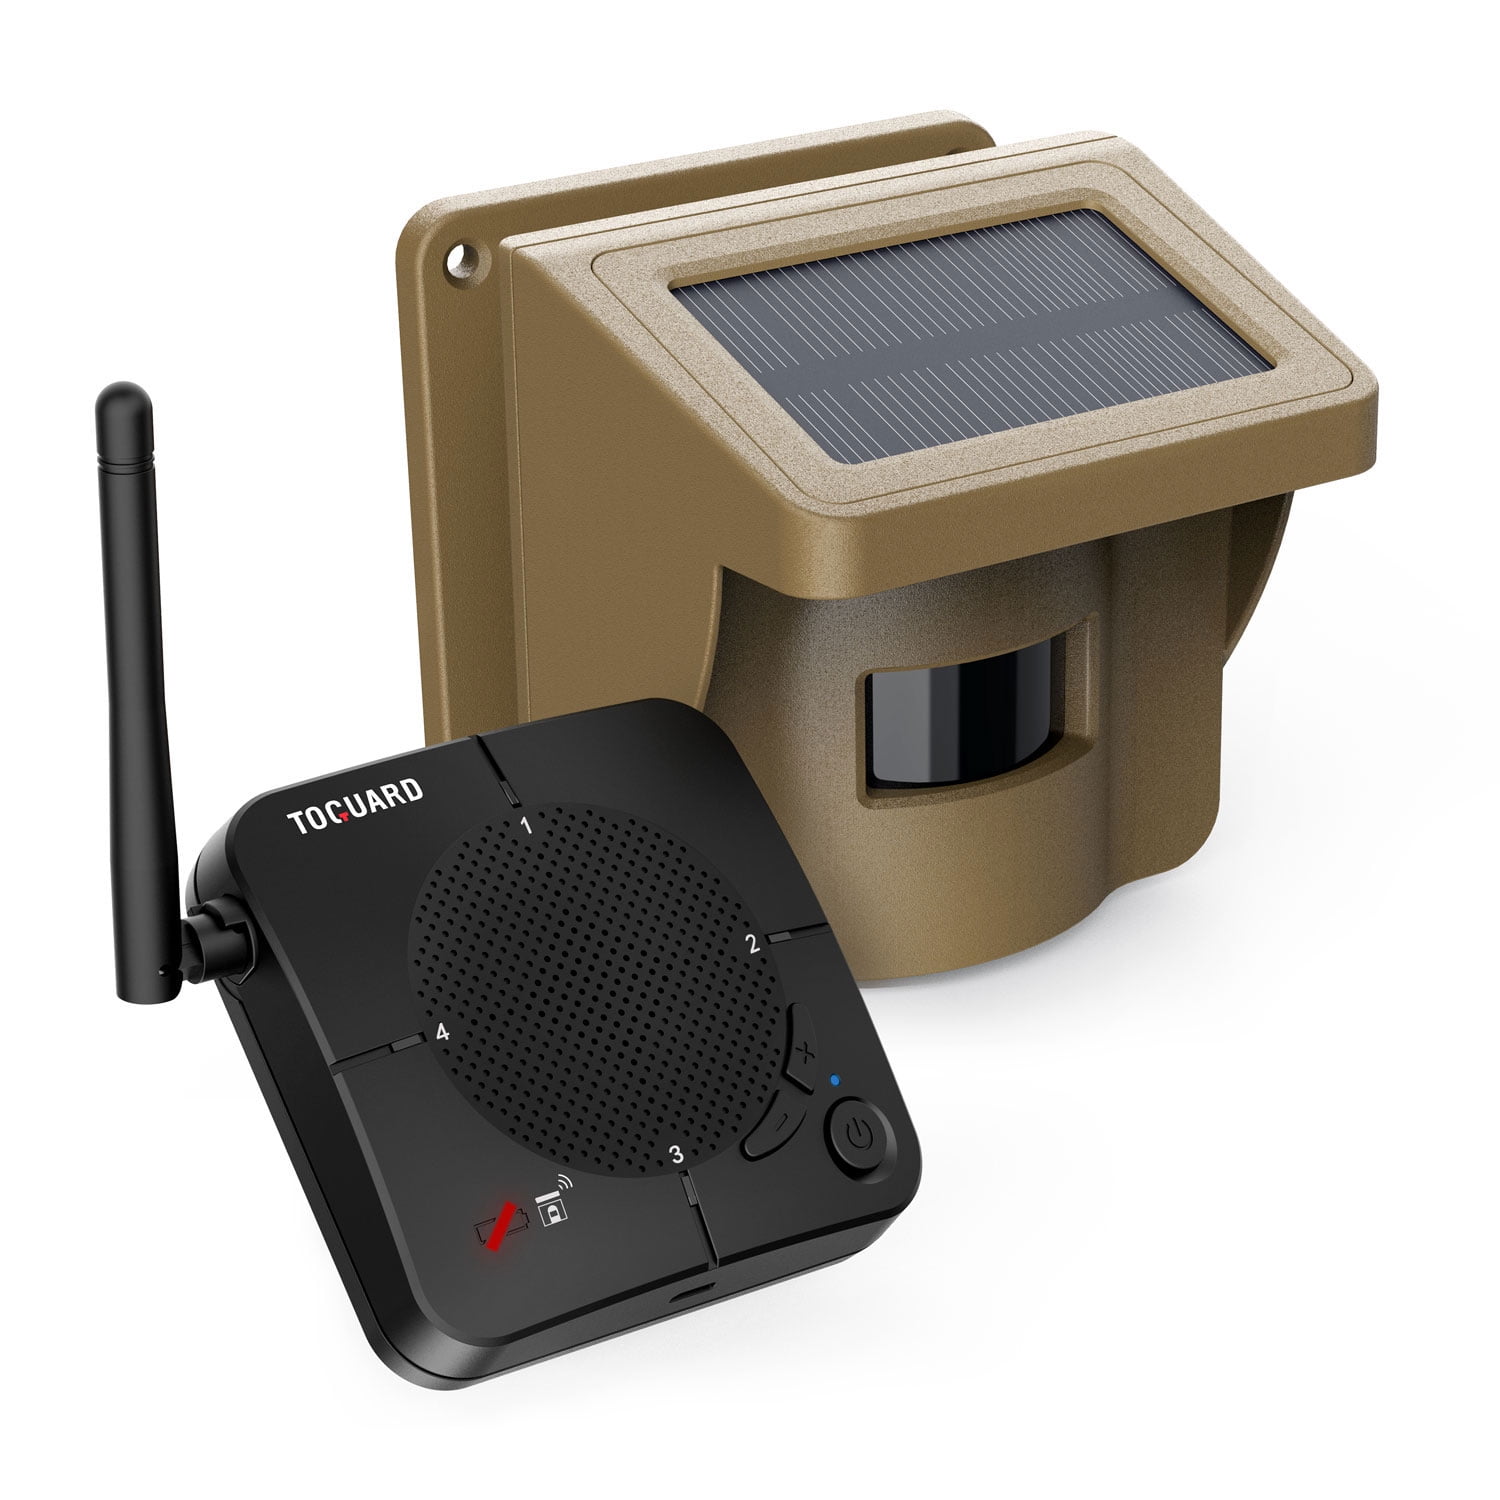 Toguard Solar Driveway Alarm Outdoor Security Alert System MotionSensor, 1 Receiver 1 Sensors